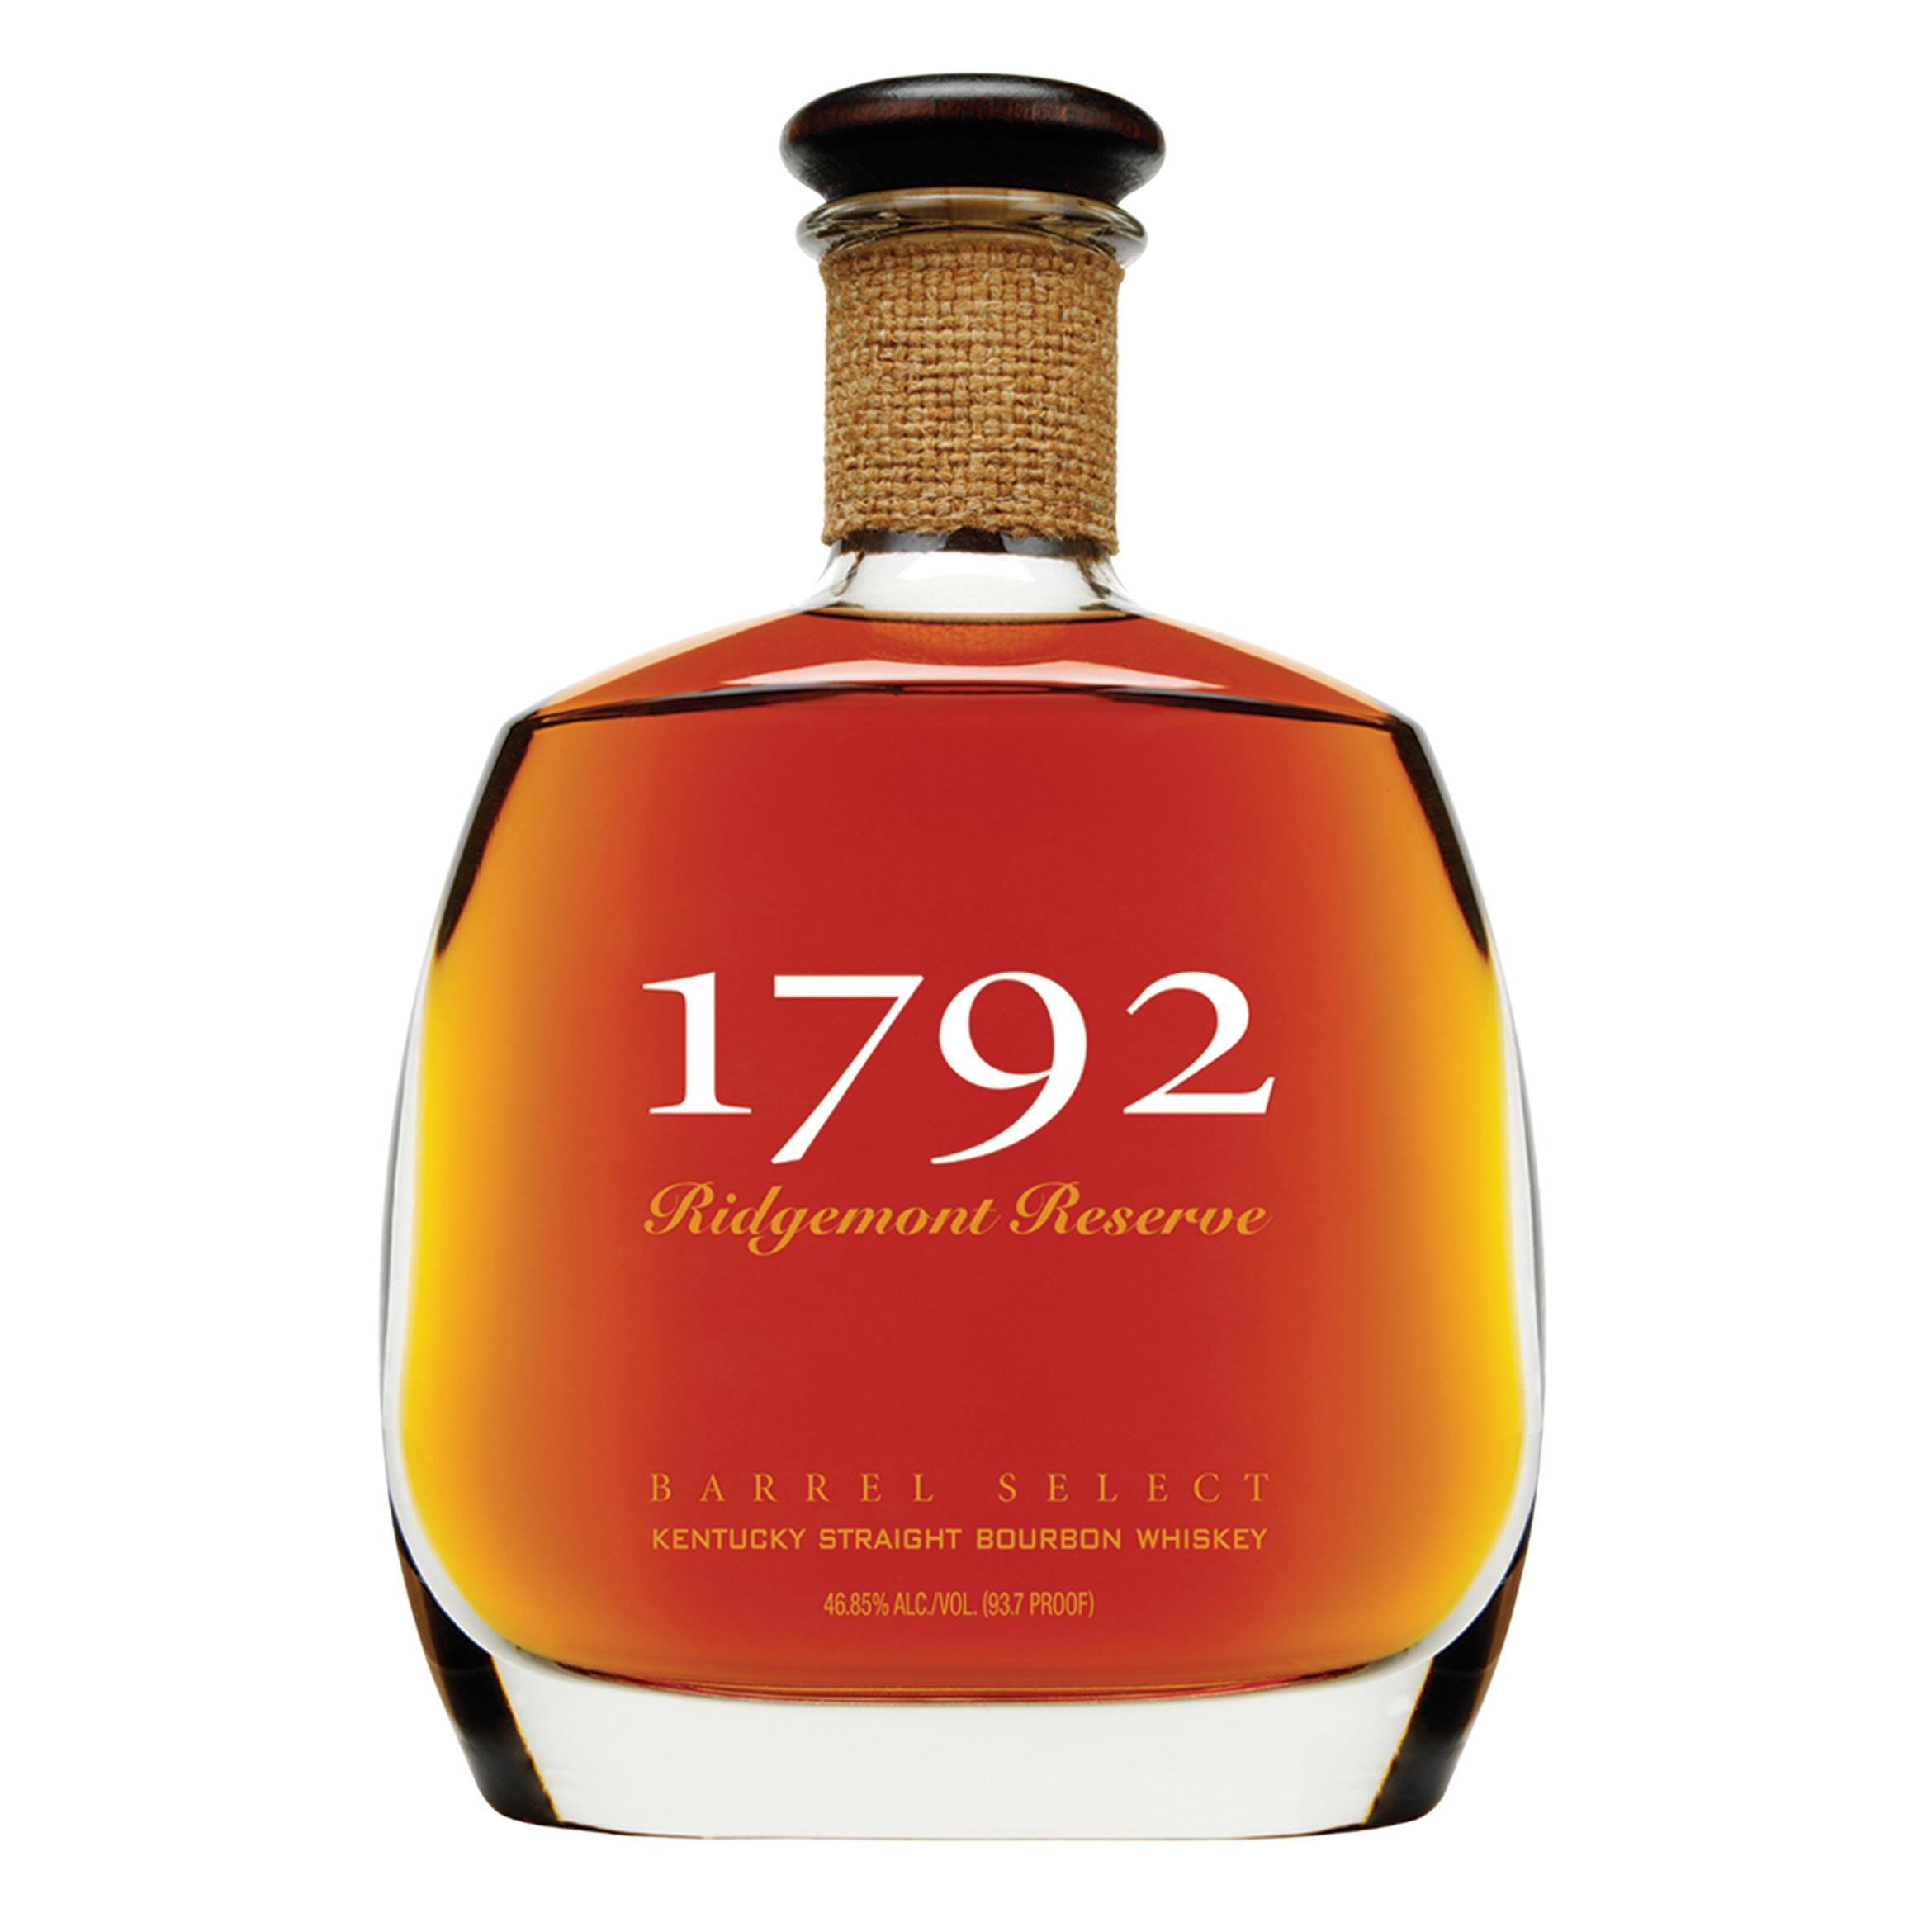 1792 Ridgemont Reserve Kentucky Straight Bourbon Whiskey | WhiskeyTimes.com.jpg